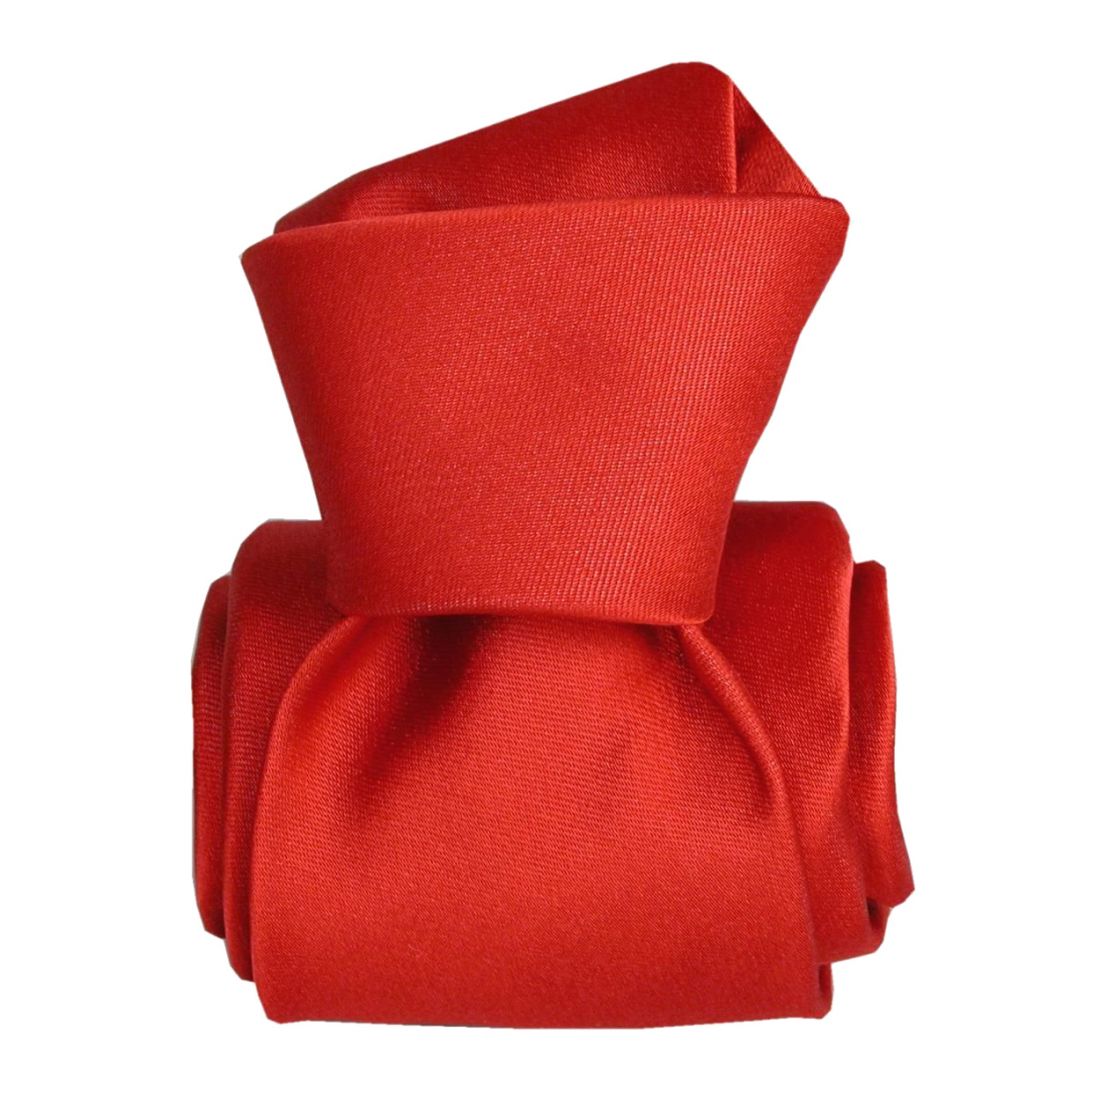 Cravate artisanale Segni et Disegni satin faite main Rouge Soie Uni Homme